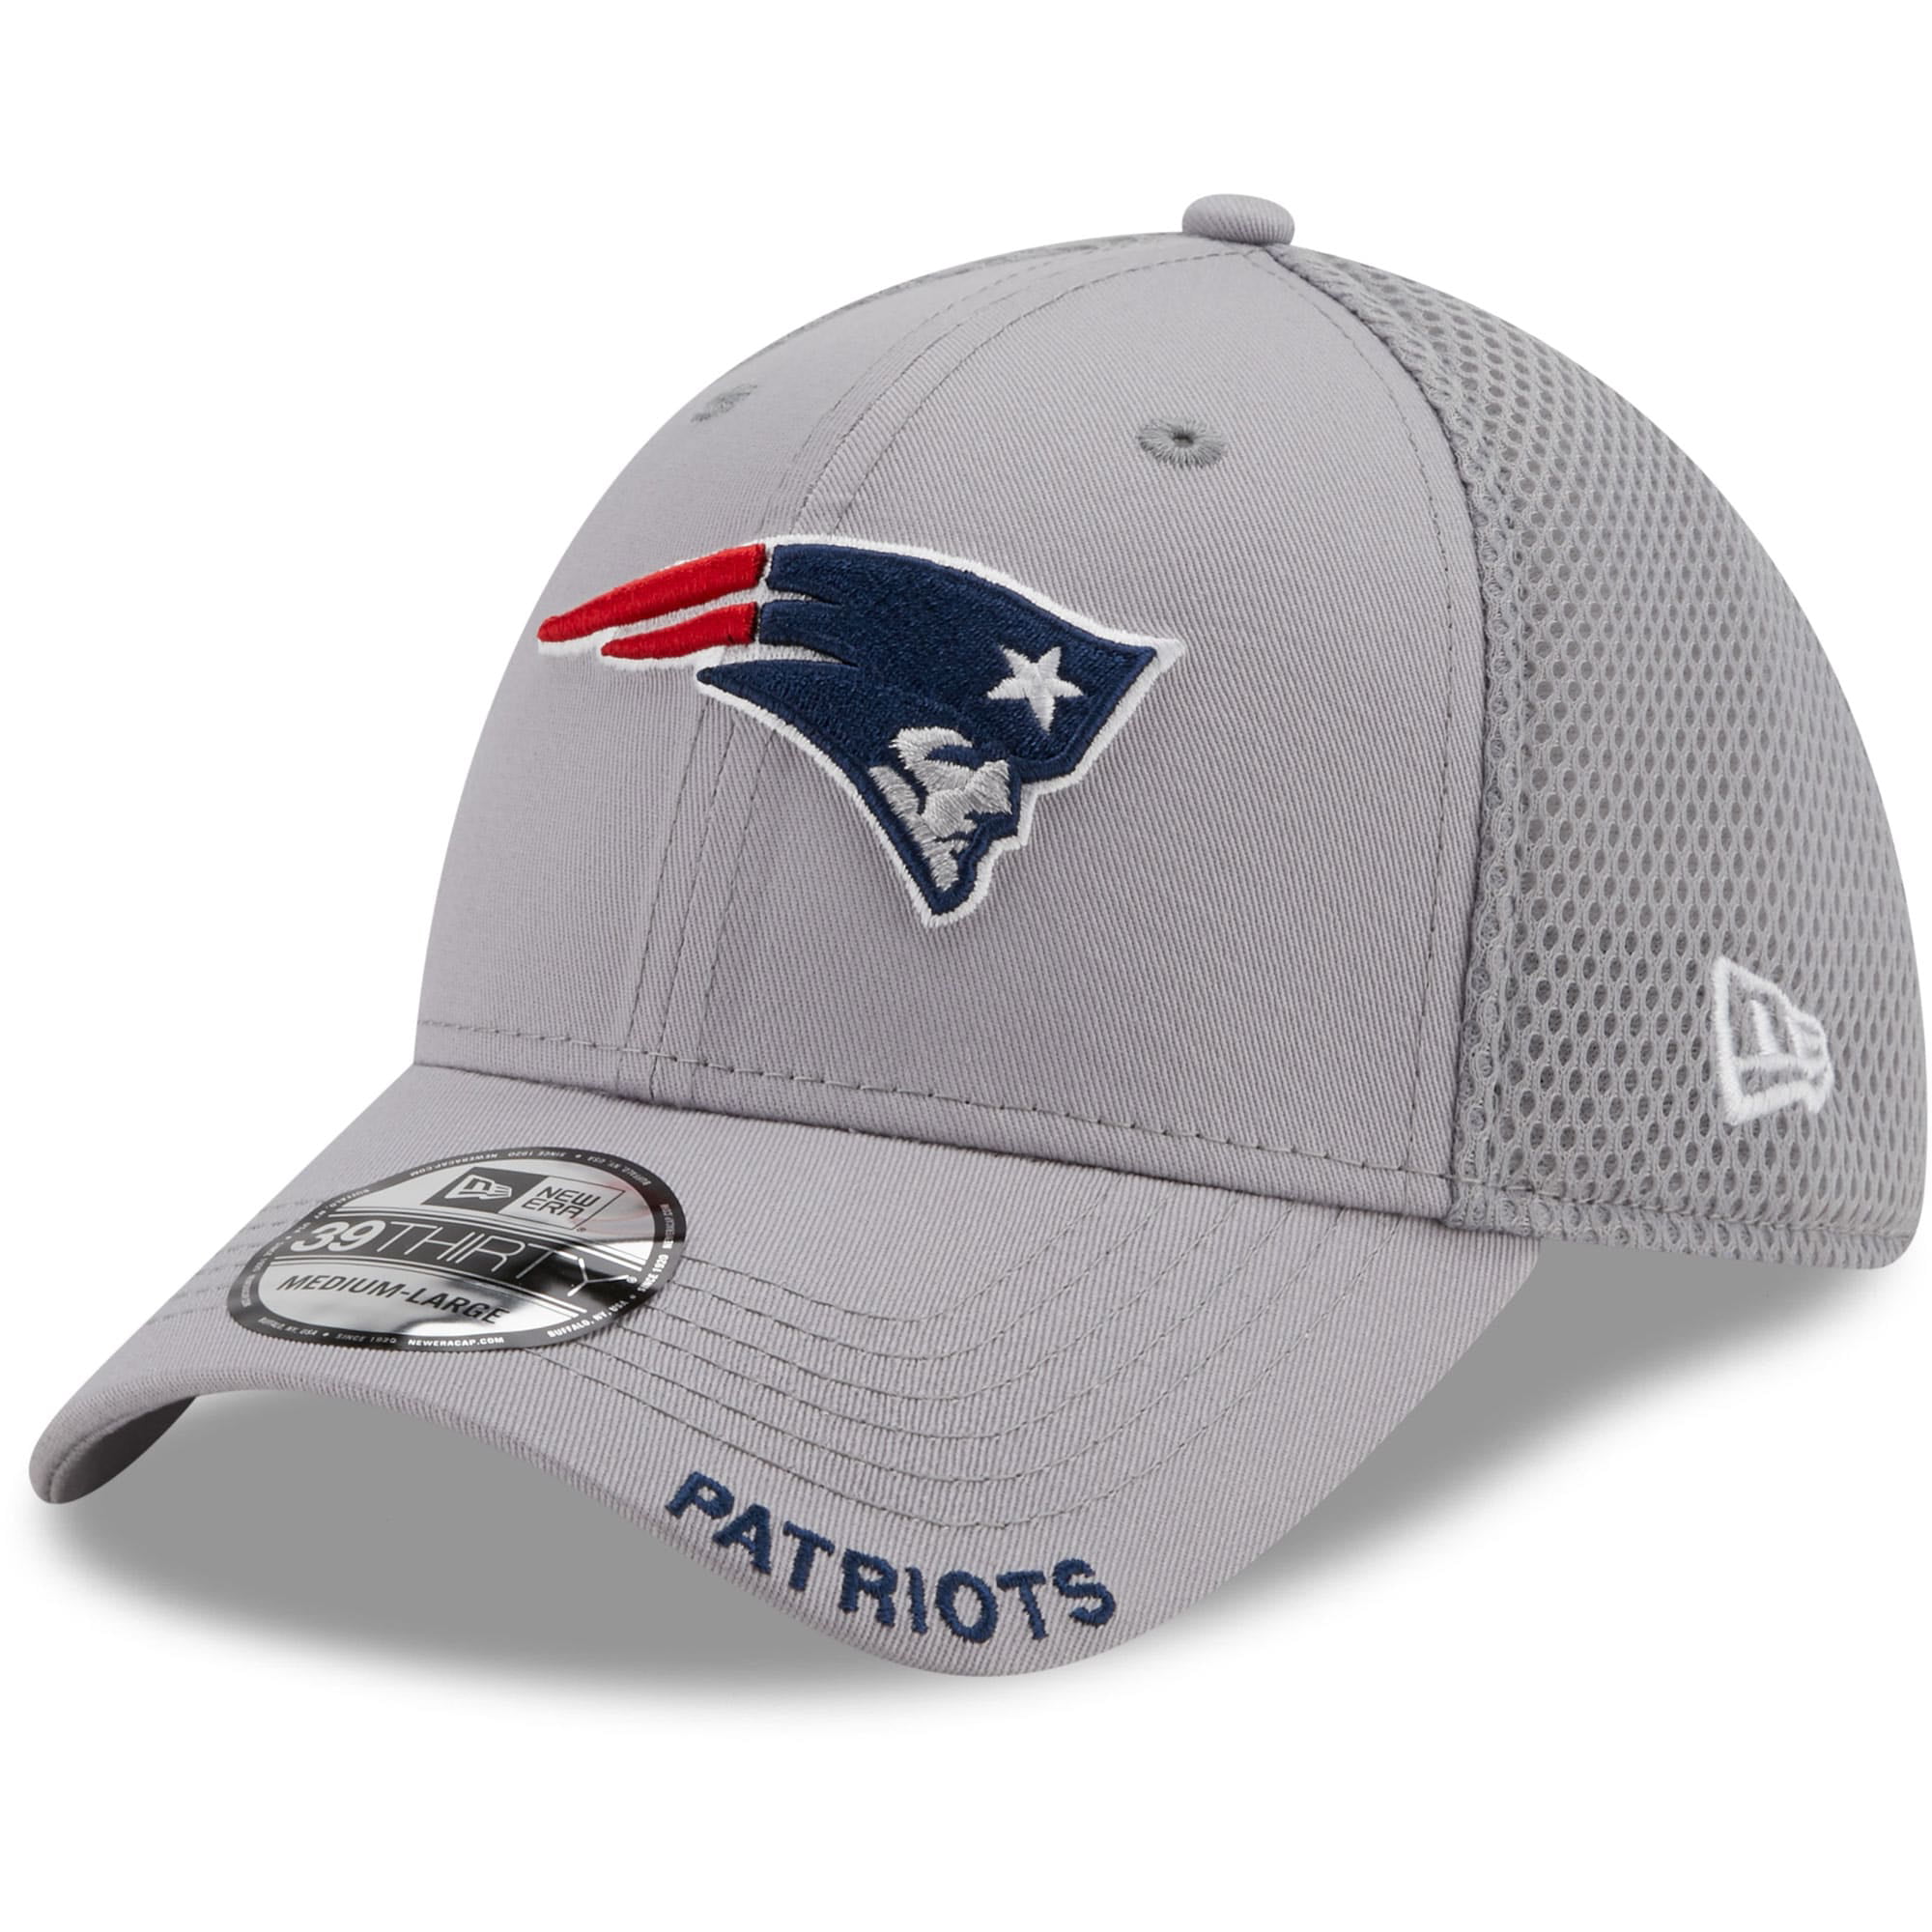 Sideline Home New England Patriots New Era 39Thirty Cap 